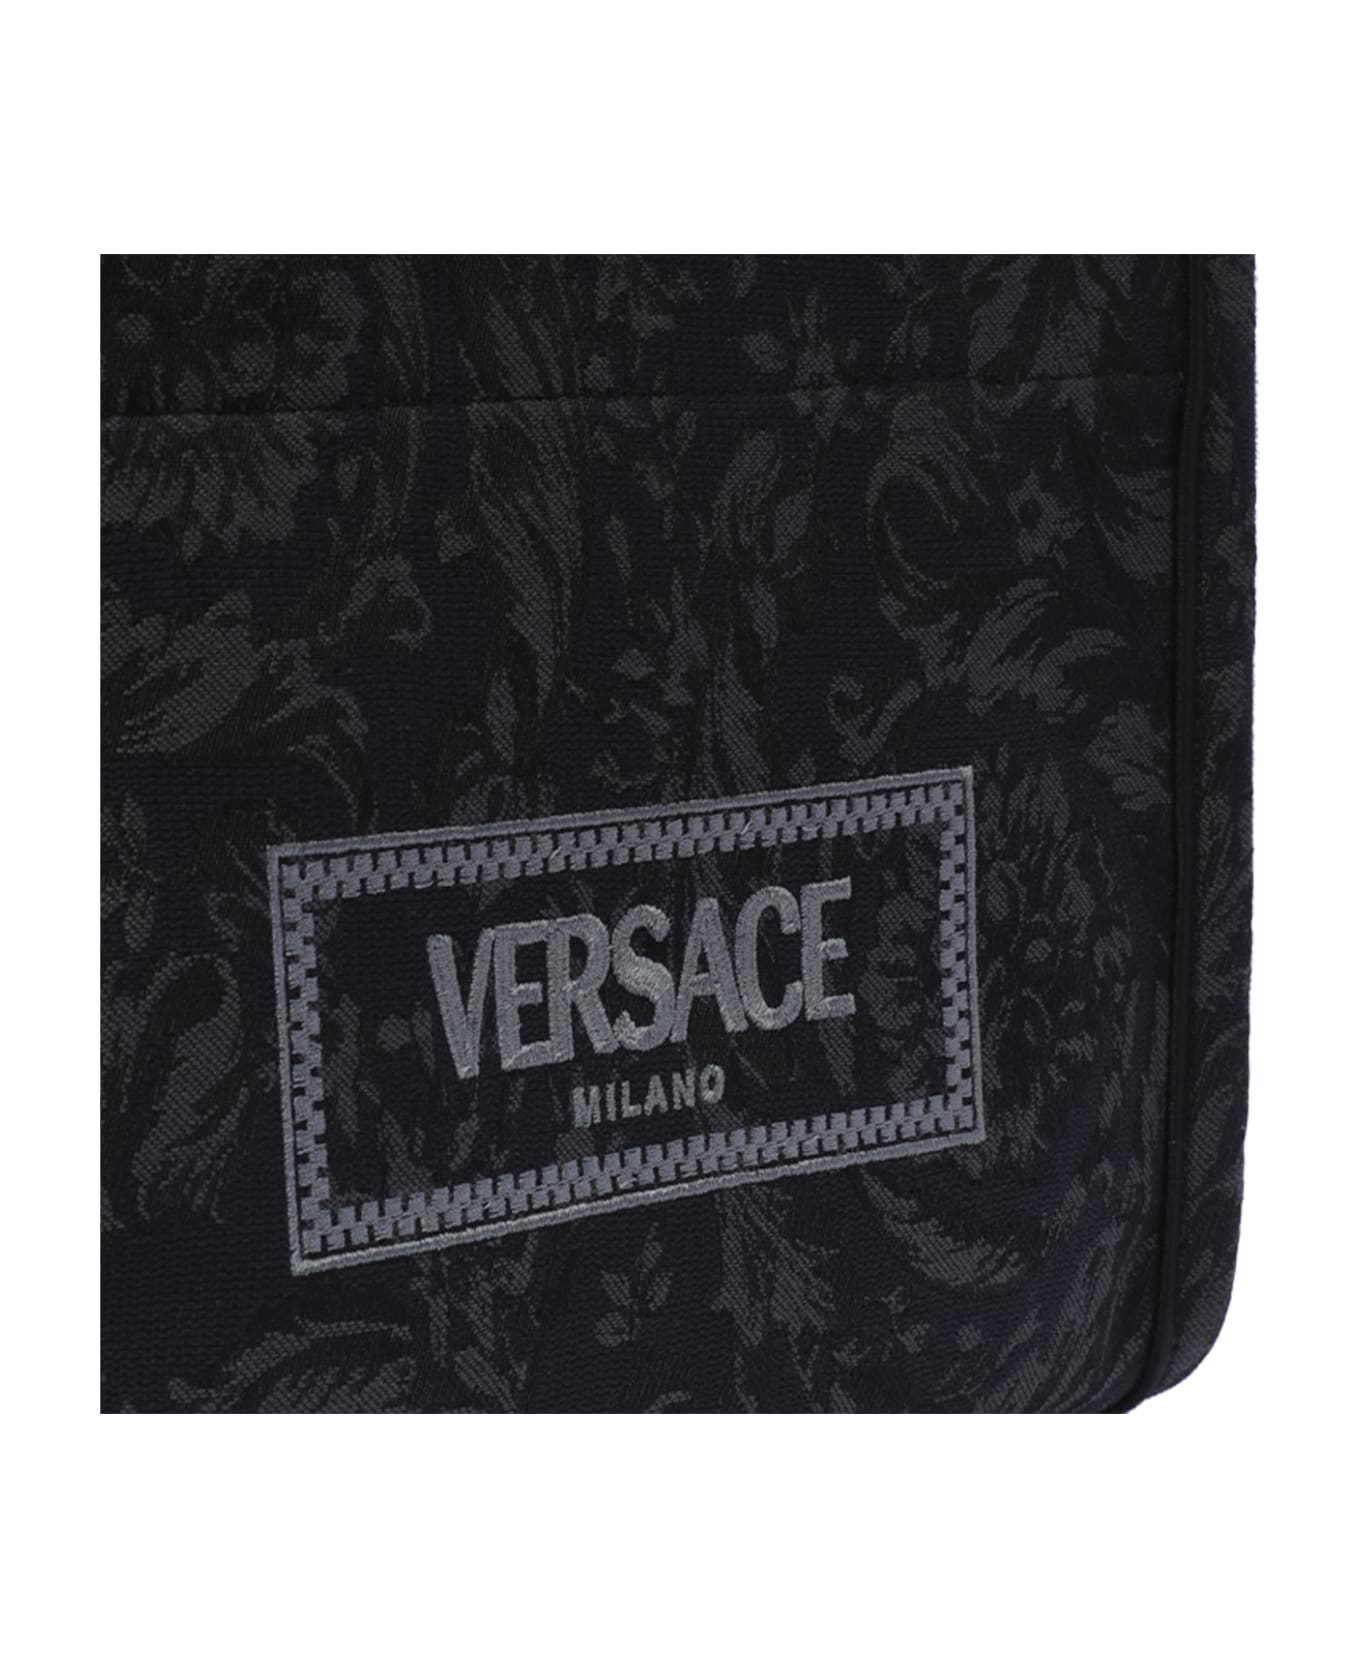 Versace Small Athena Barocco Shopper - Black